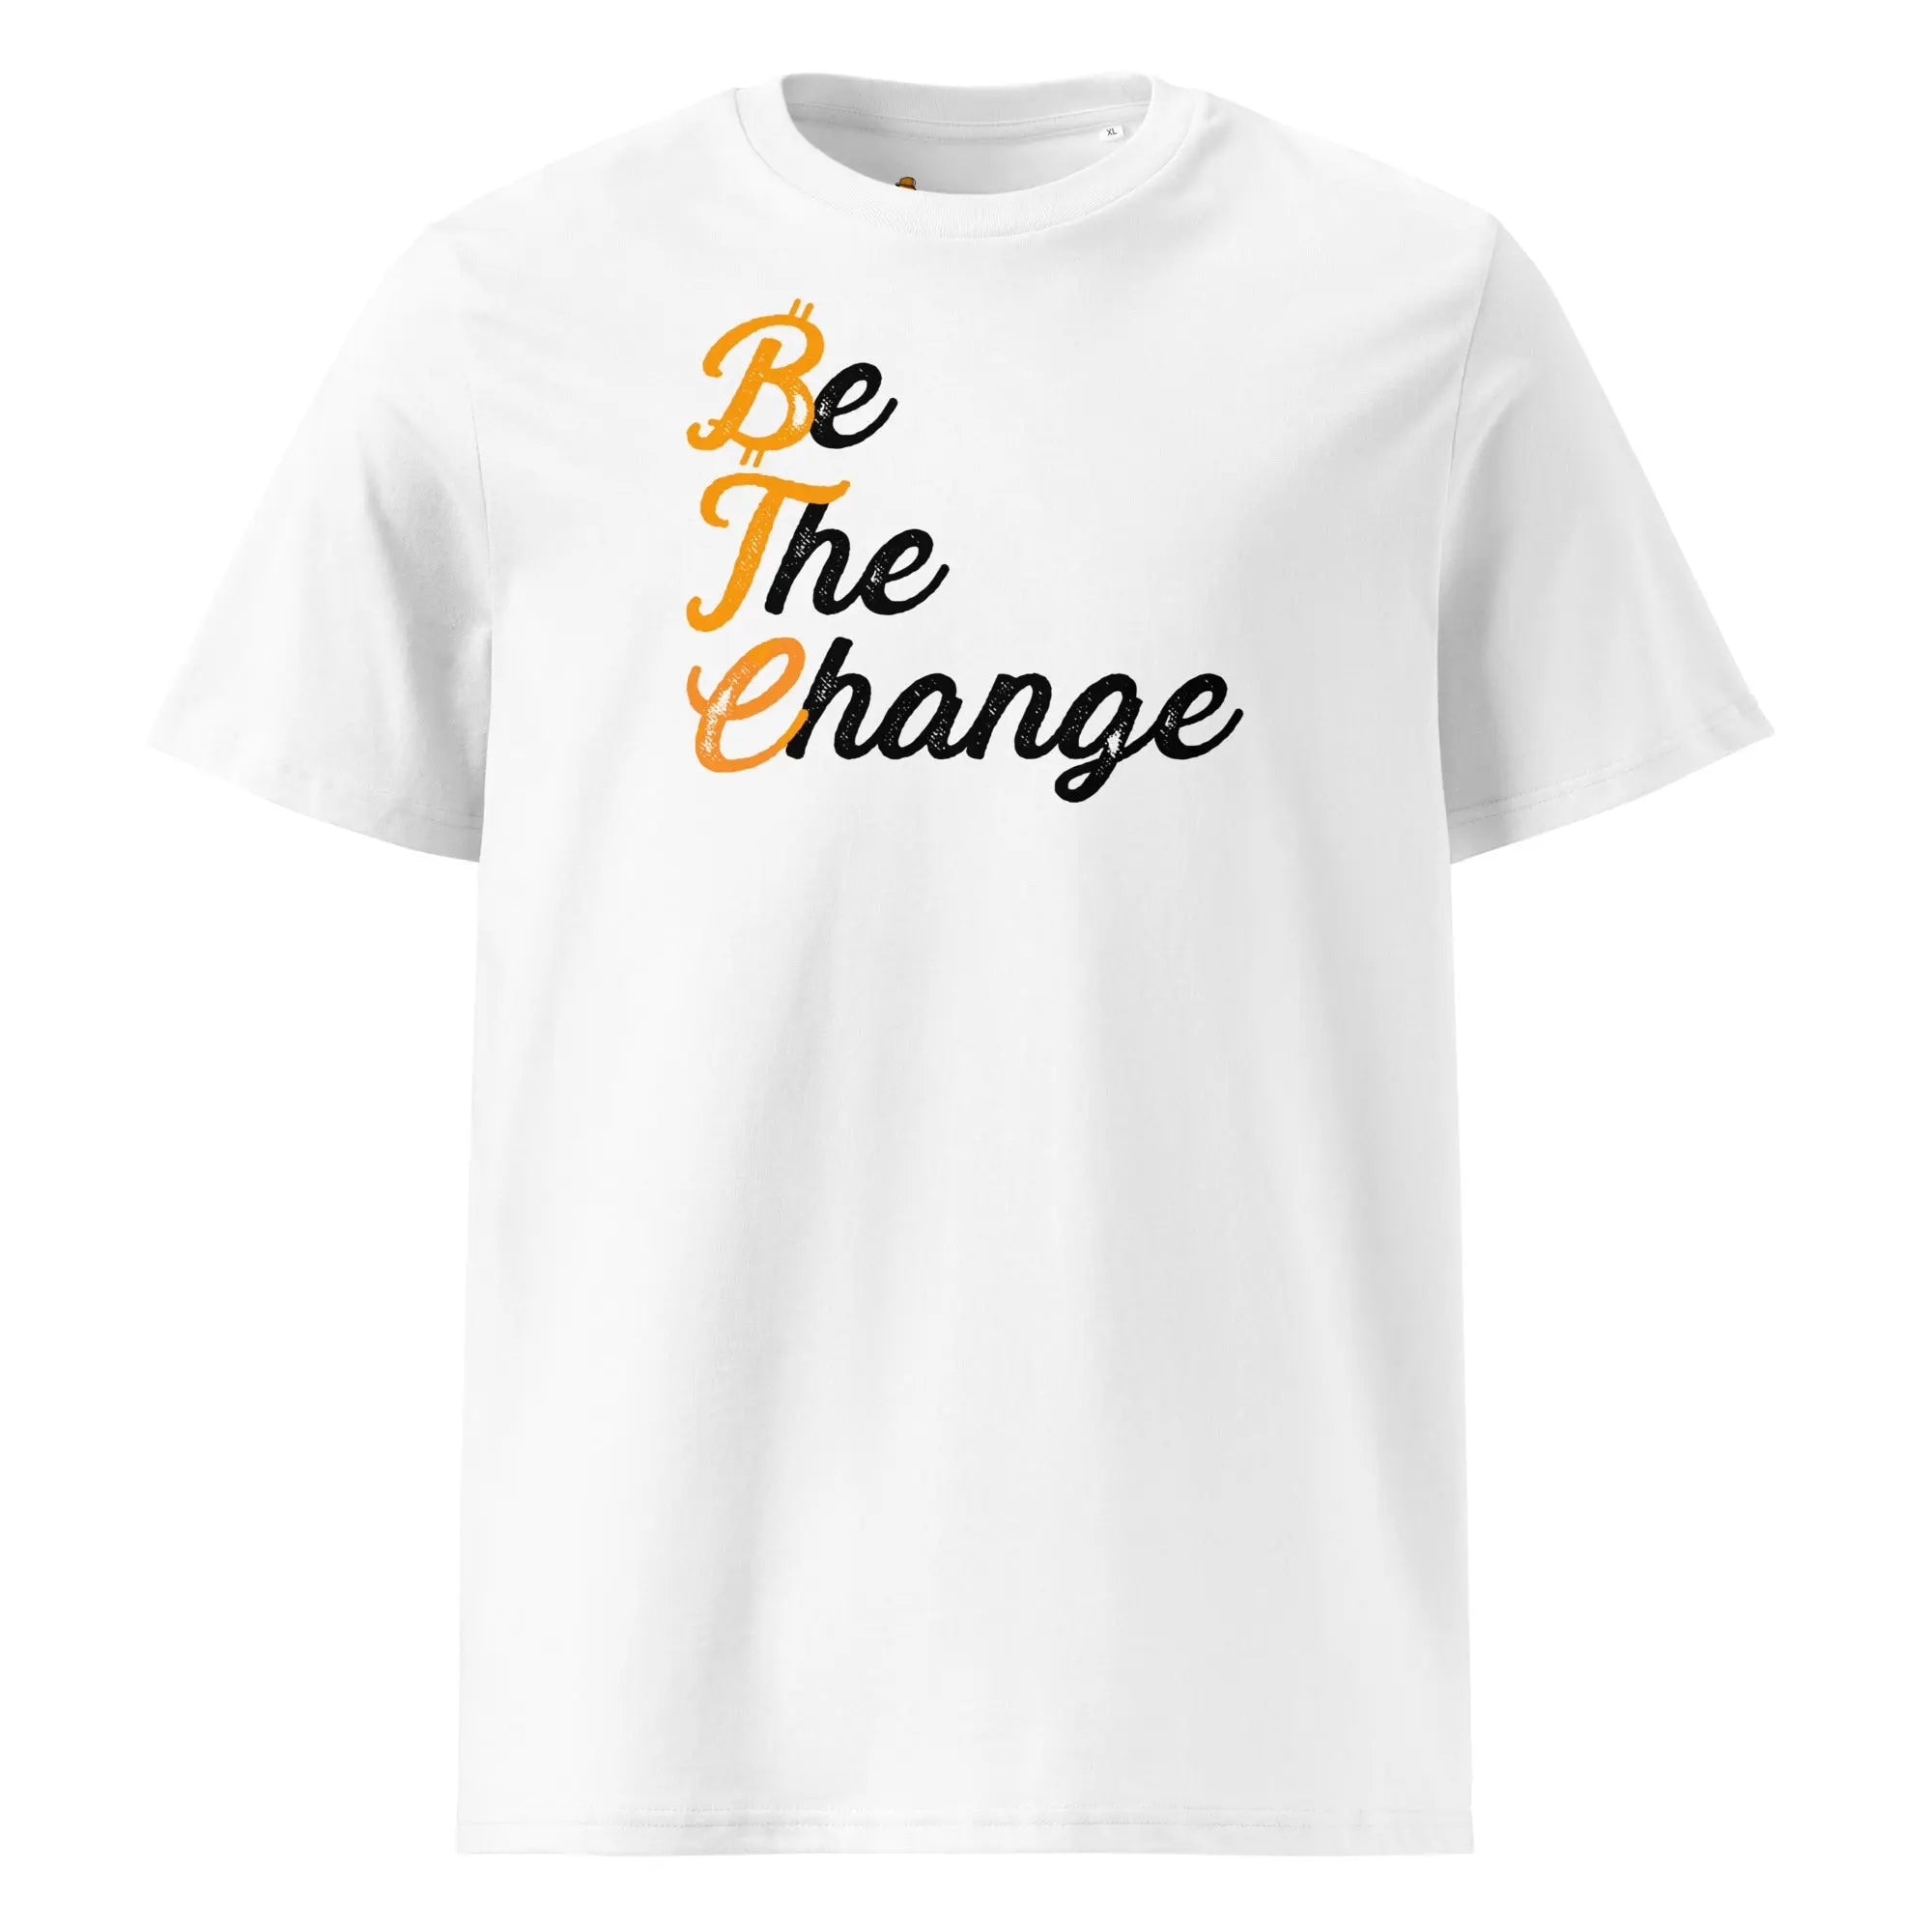 Be The Change - Premium Unisex Organic Cotton Bitcoin T-shirt White Color